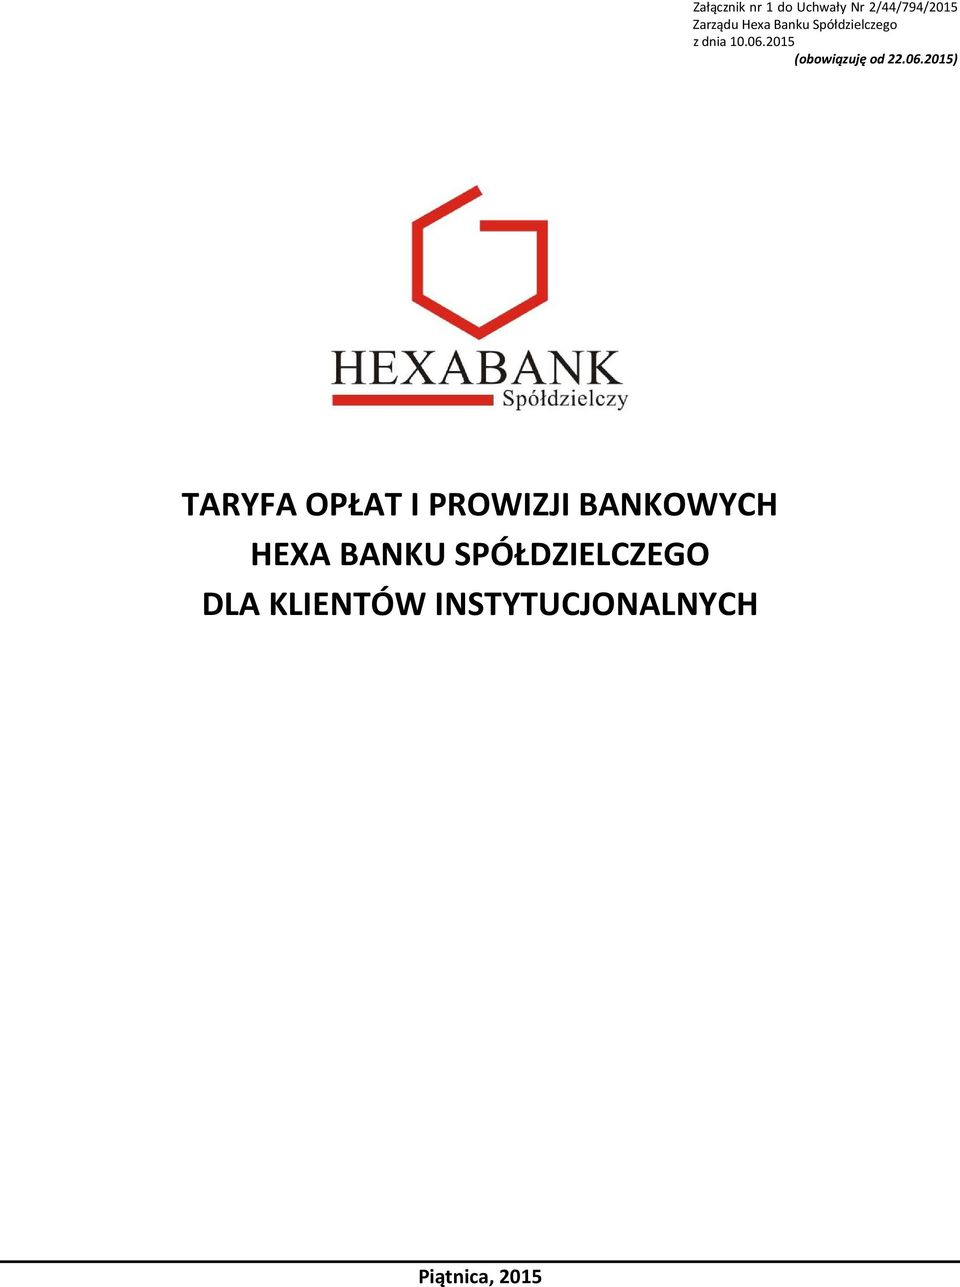 0.201) TARYFA OPŁAT I PROWIZJI BANKOWYCH HEXA BANKU